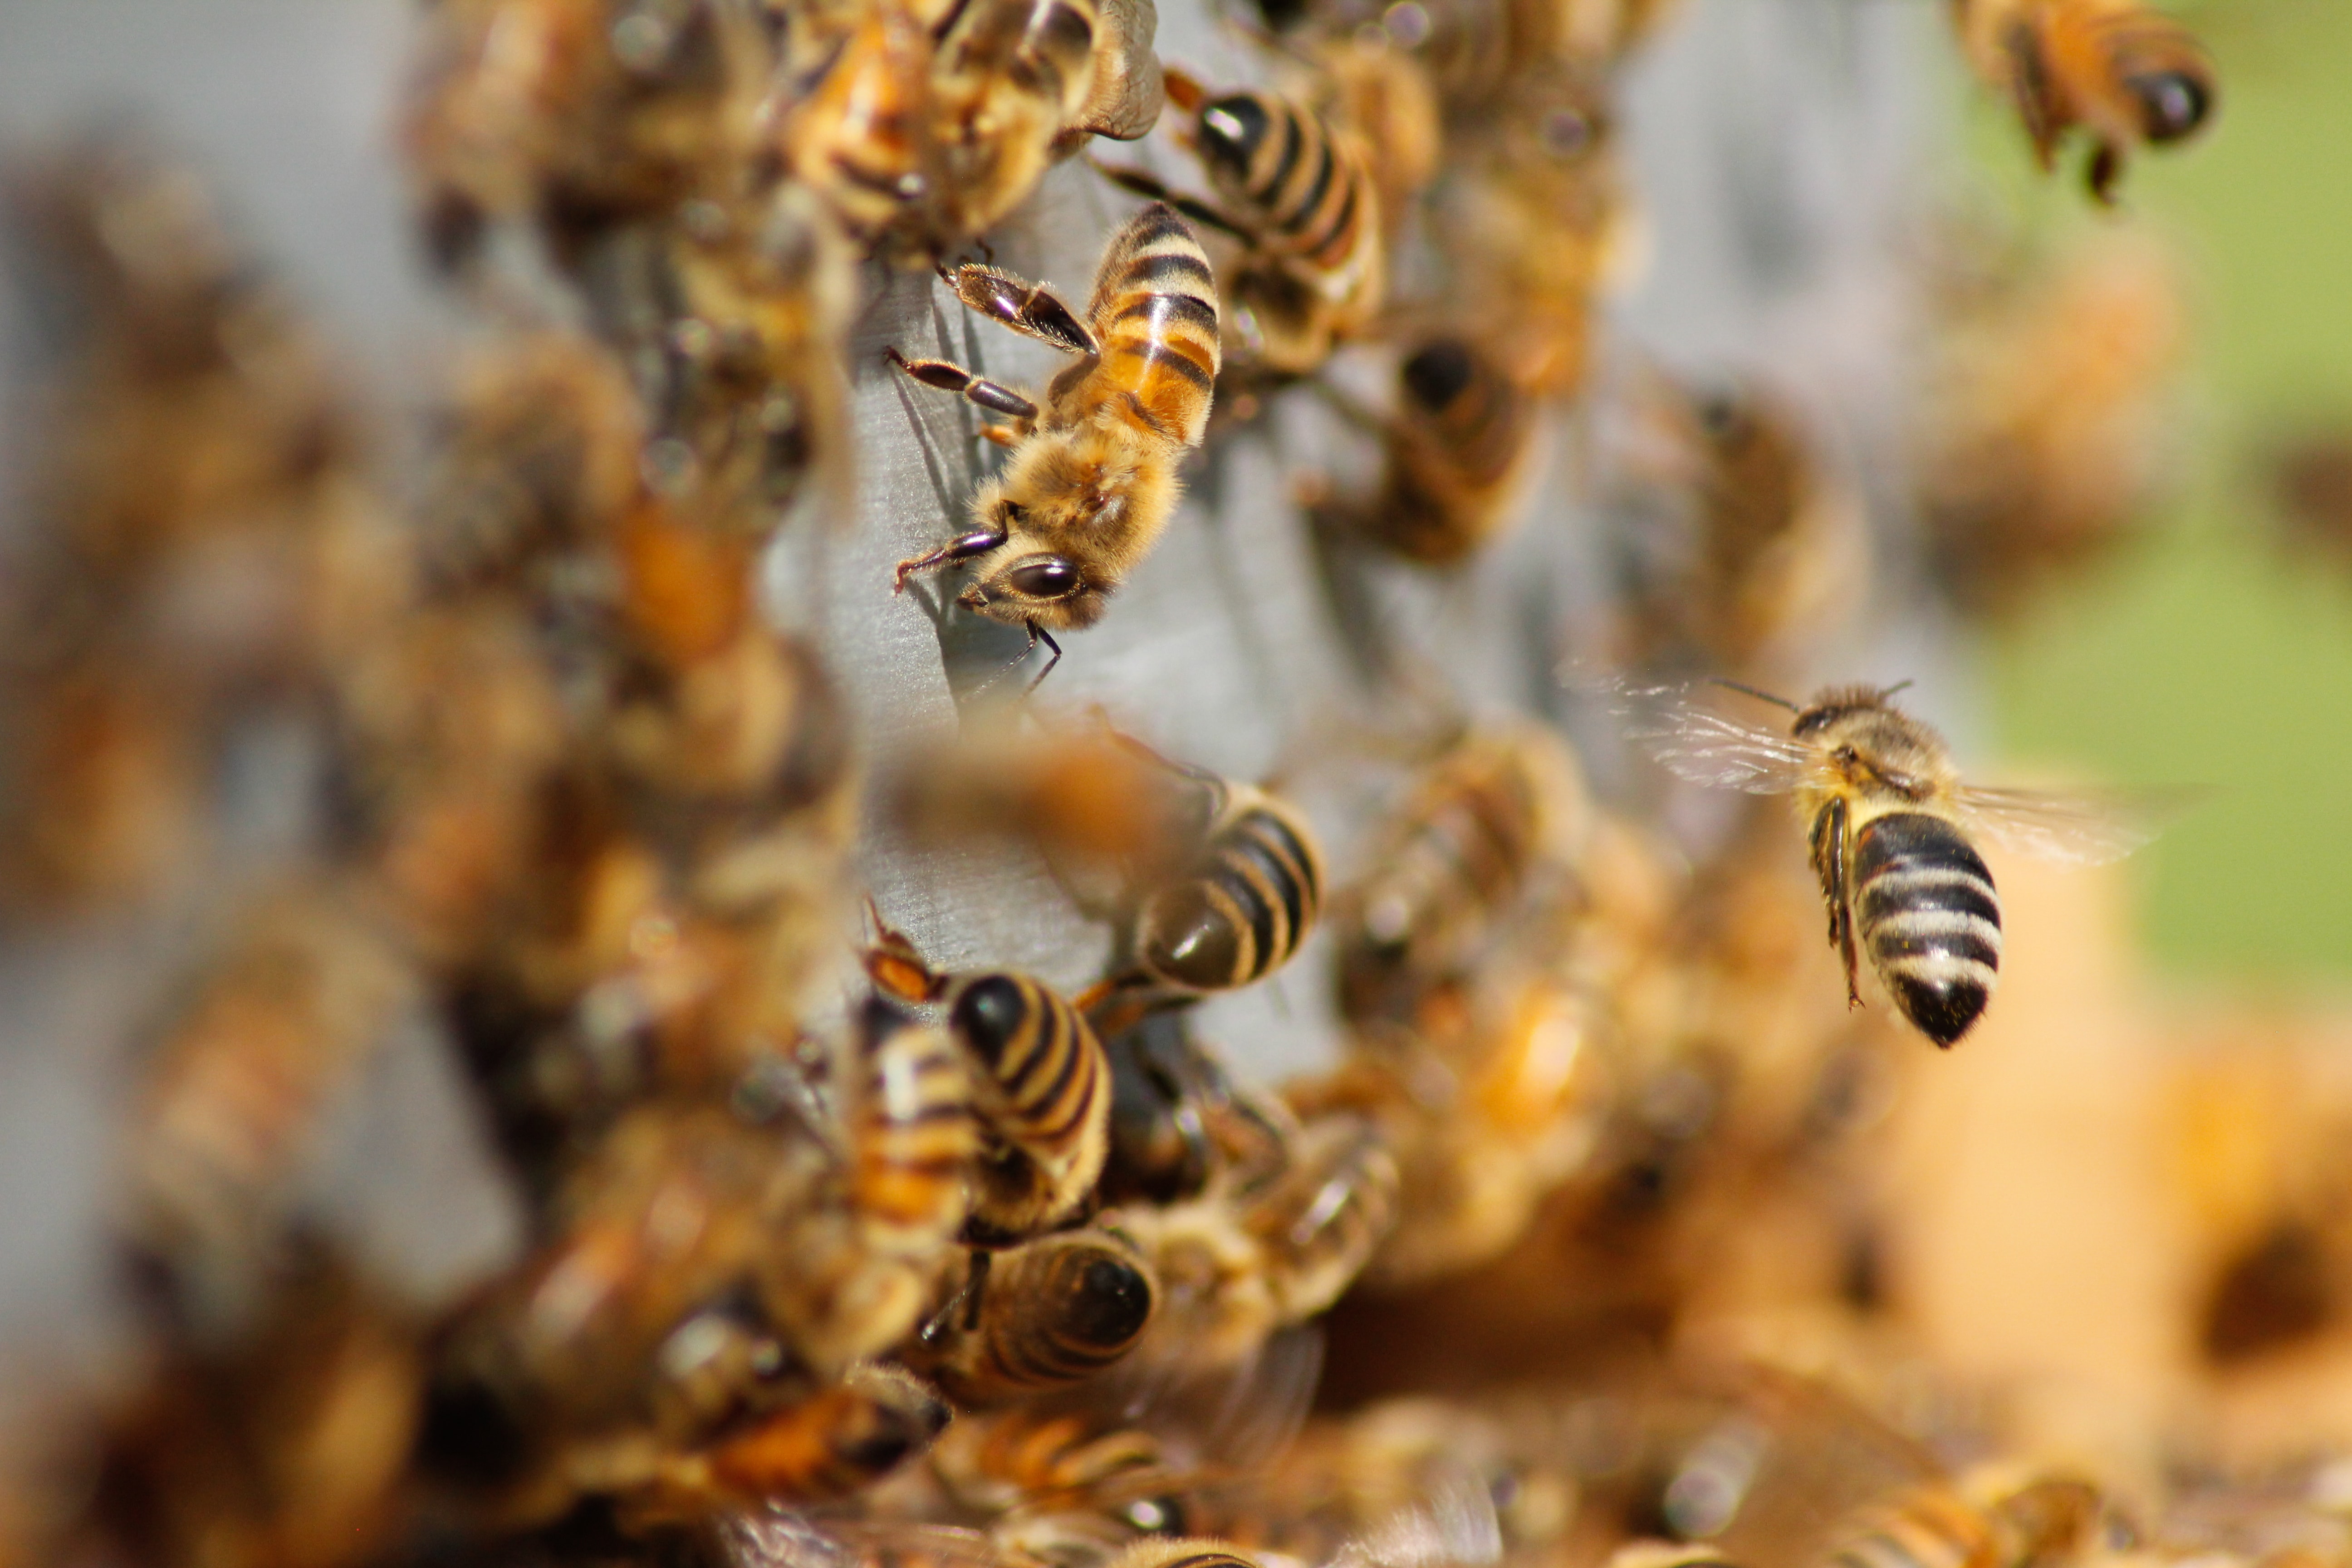 Honey bees swarm over honeycomb